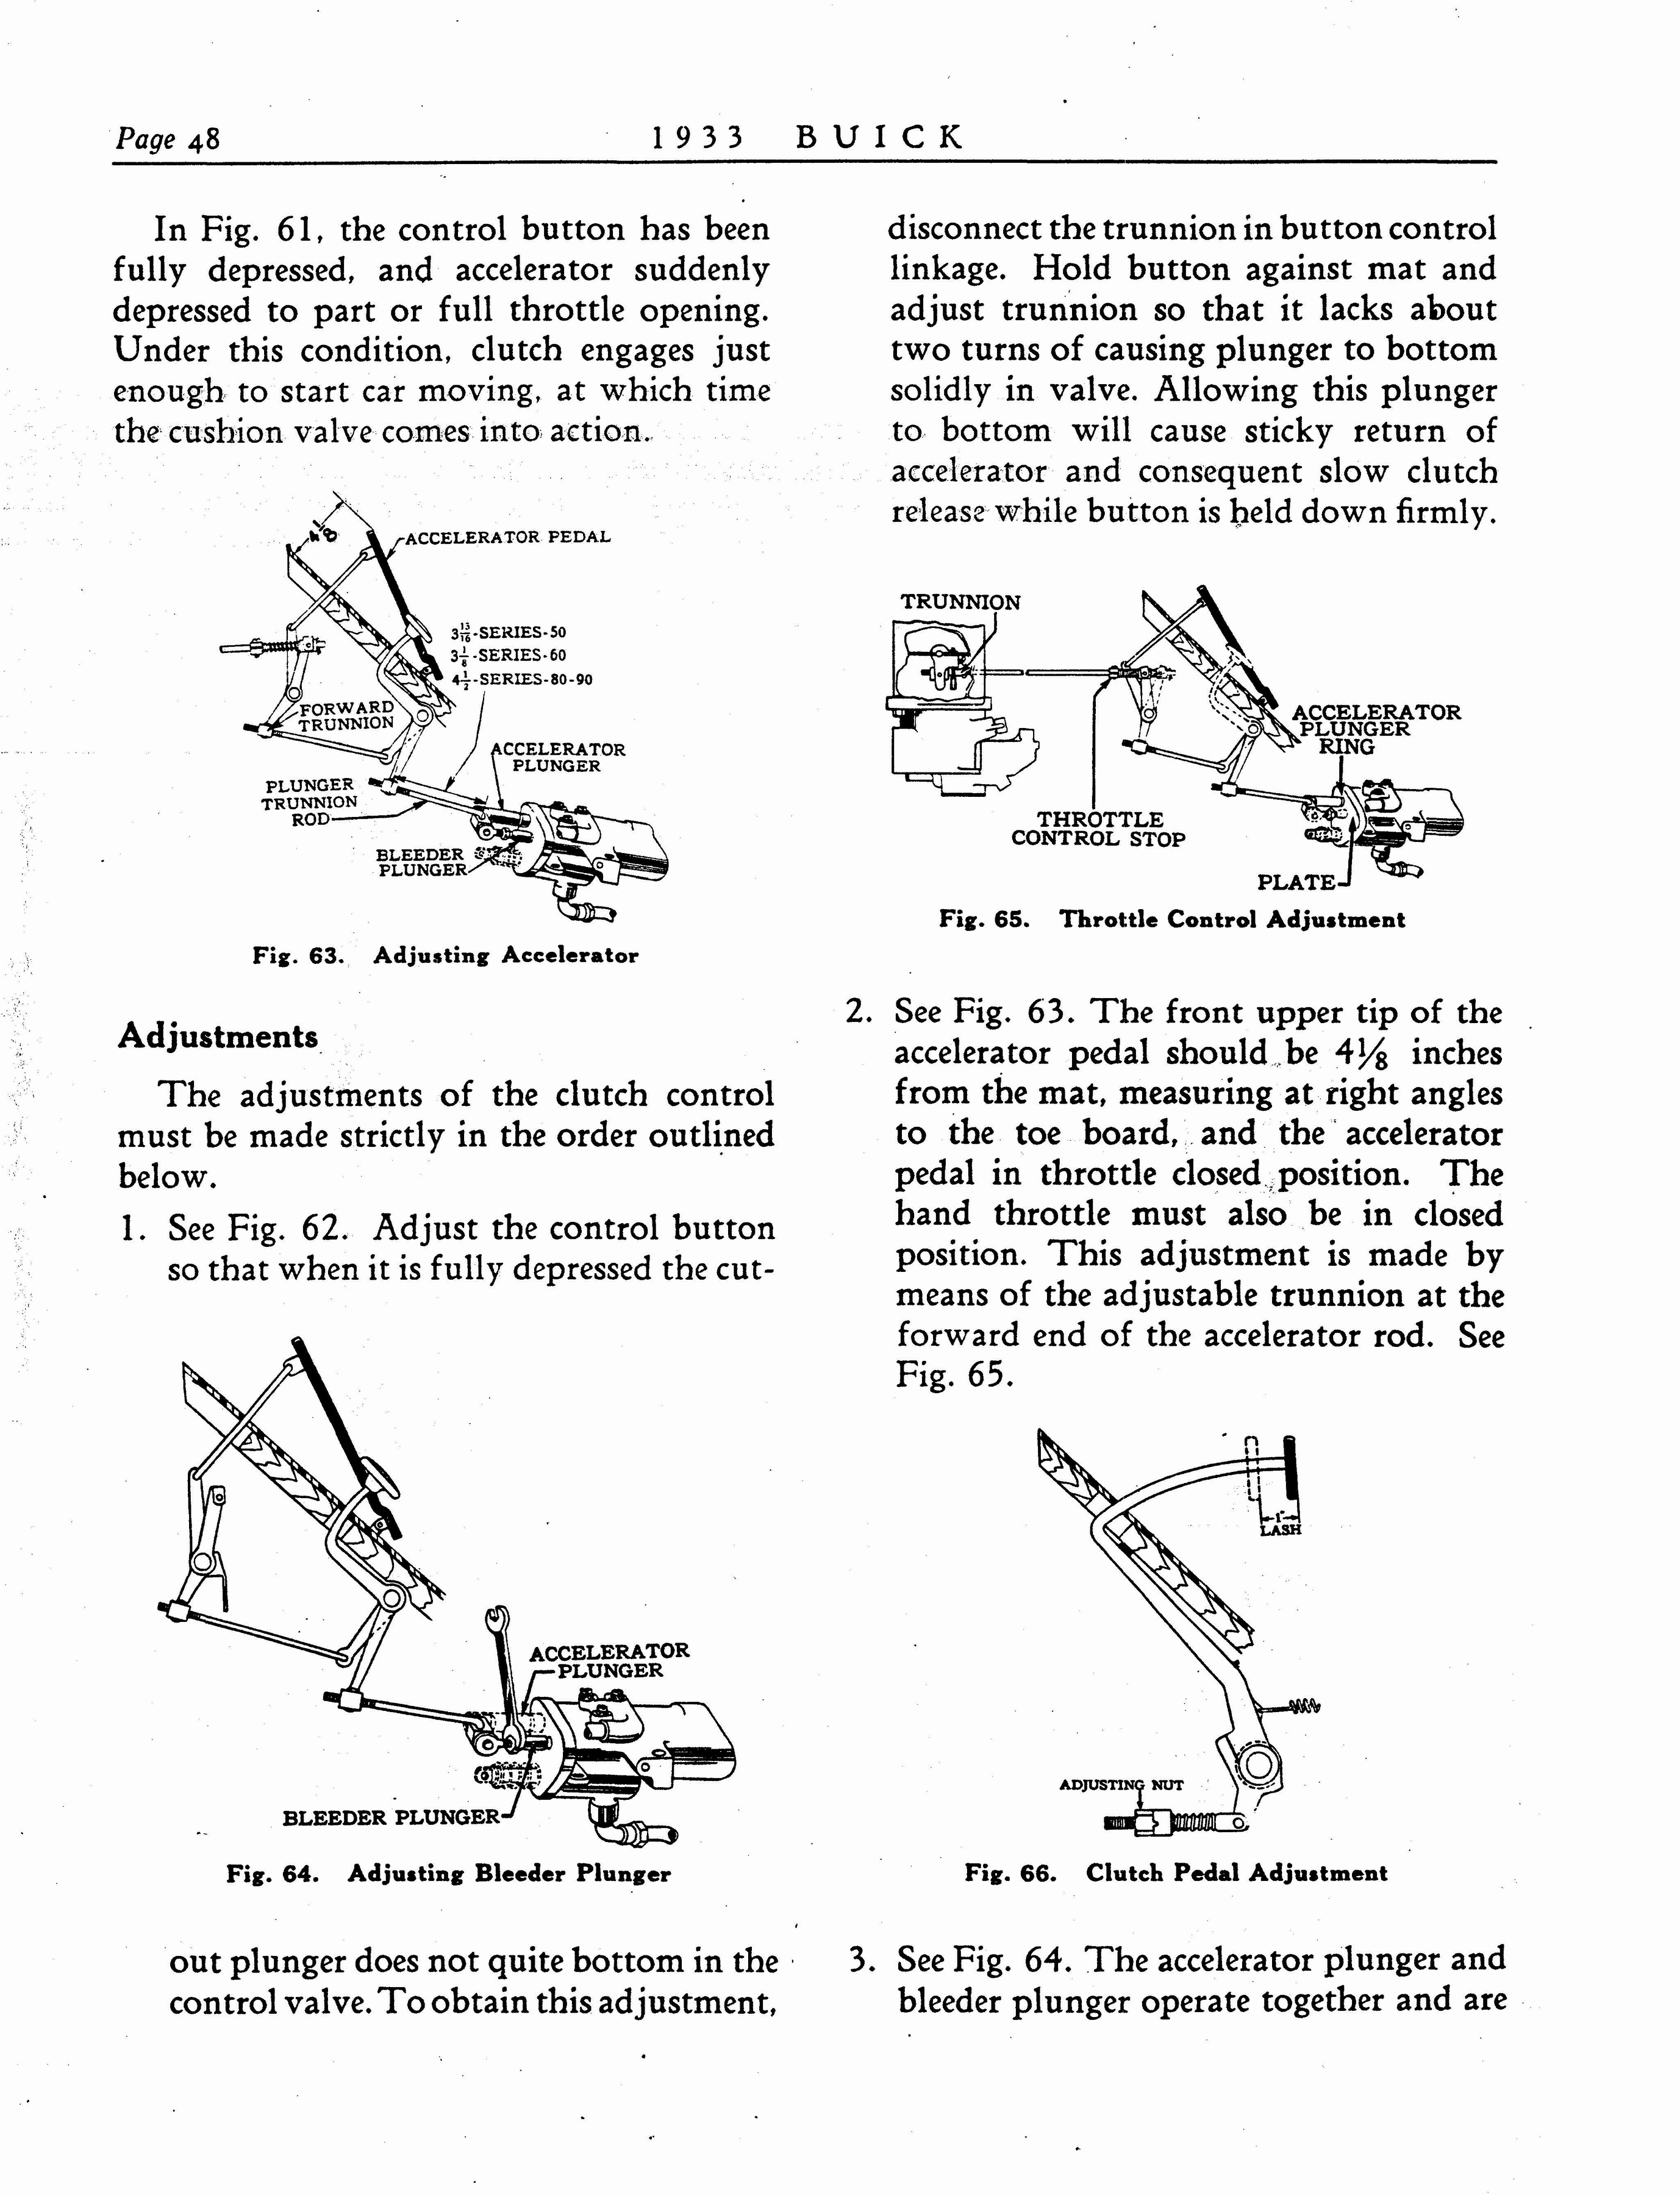 n_1933 Buick Shop Manual_Page_049.jpg